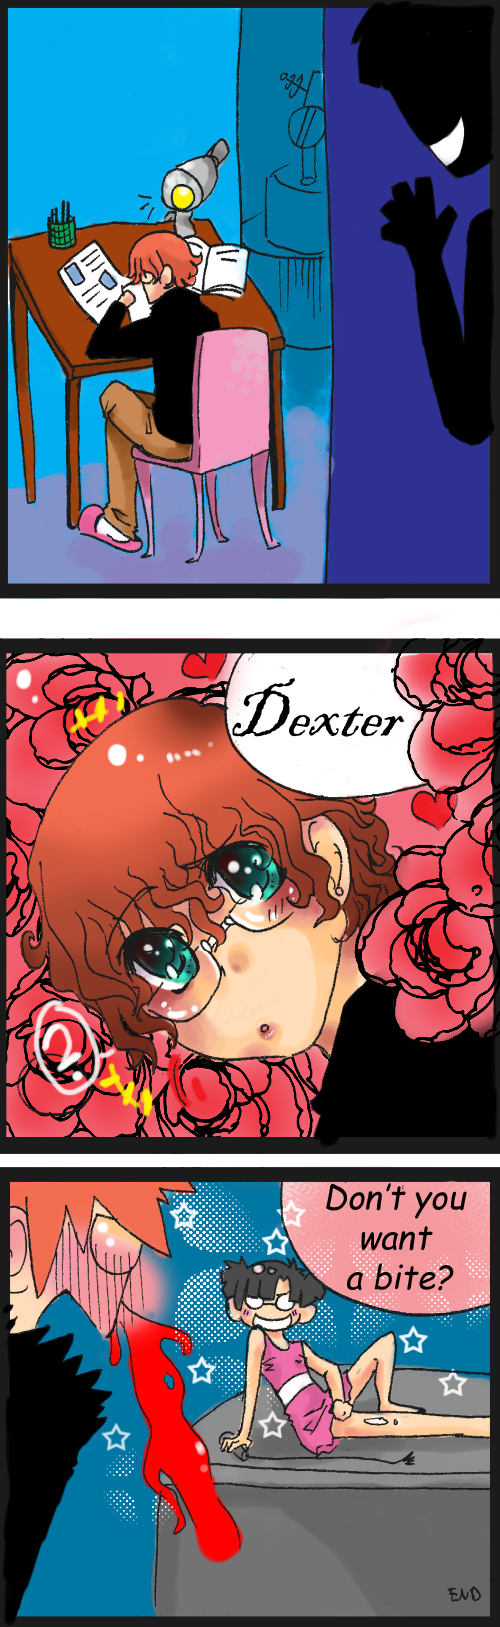 Dexter nose bleed